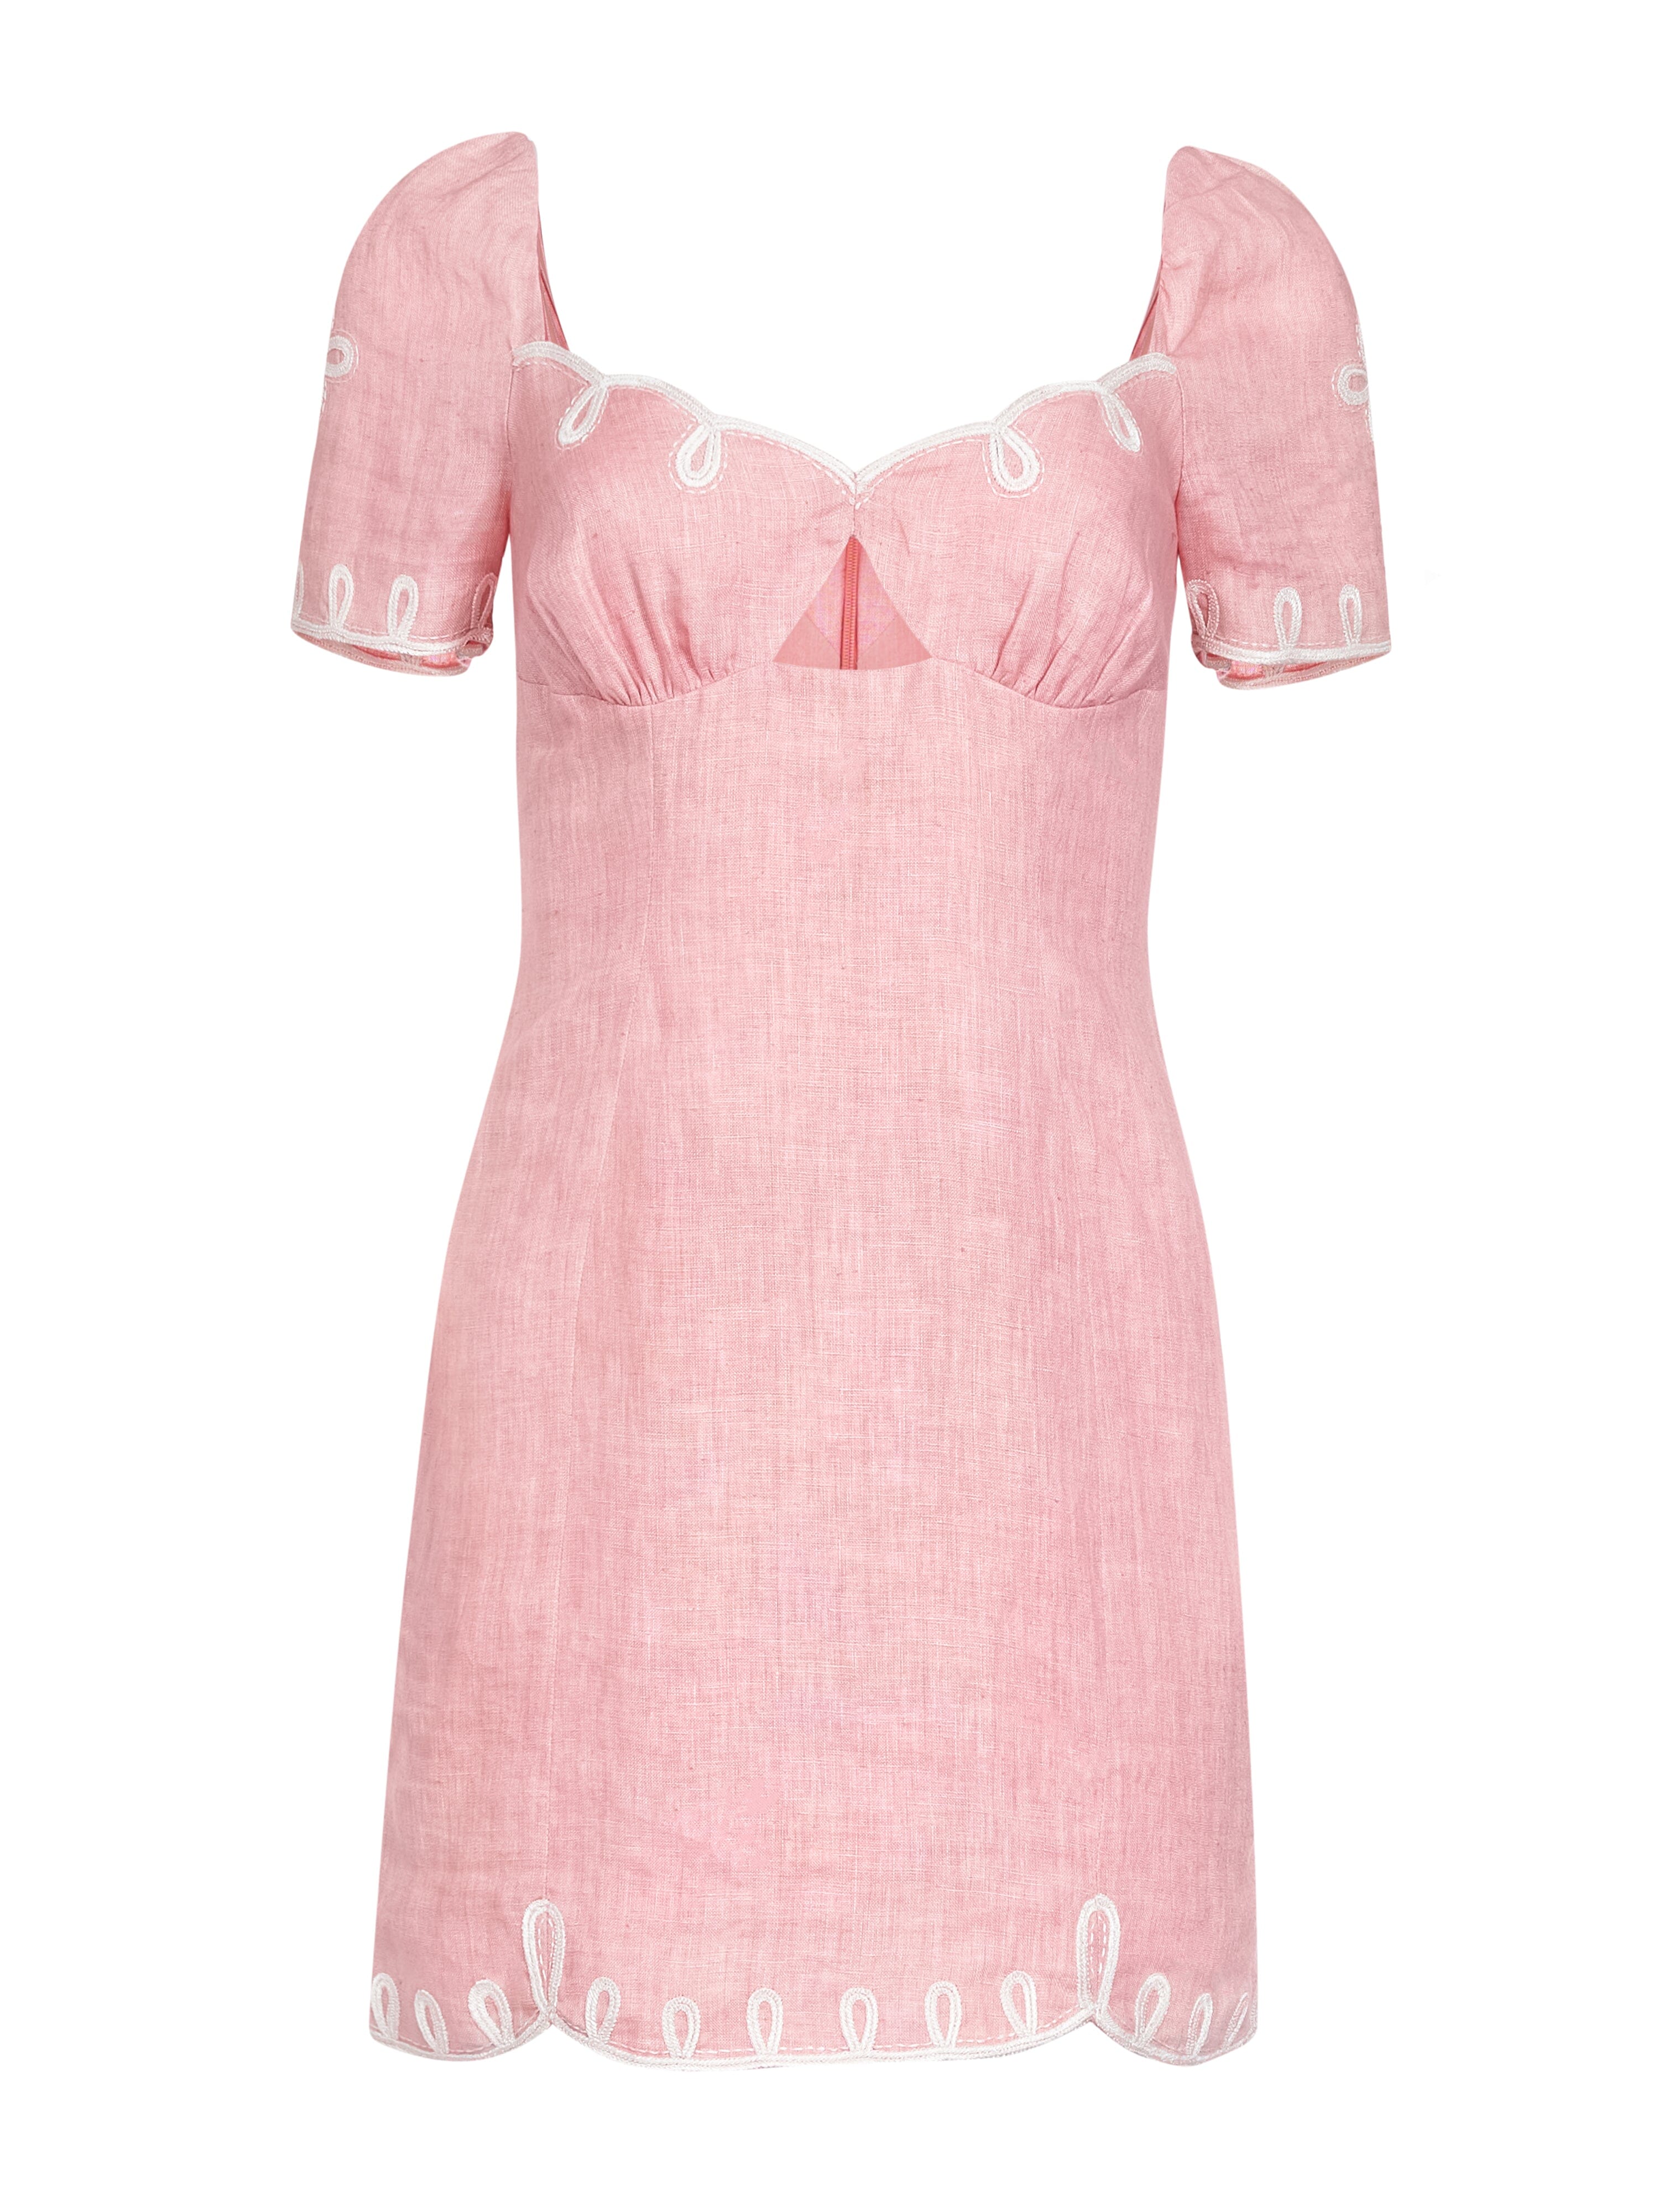 Halle Scallop Mini Dress in Sea Pink